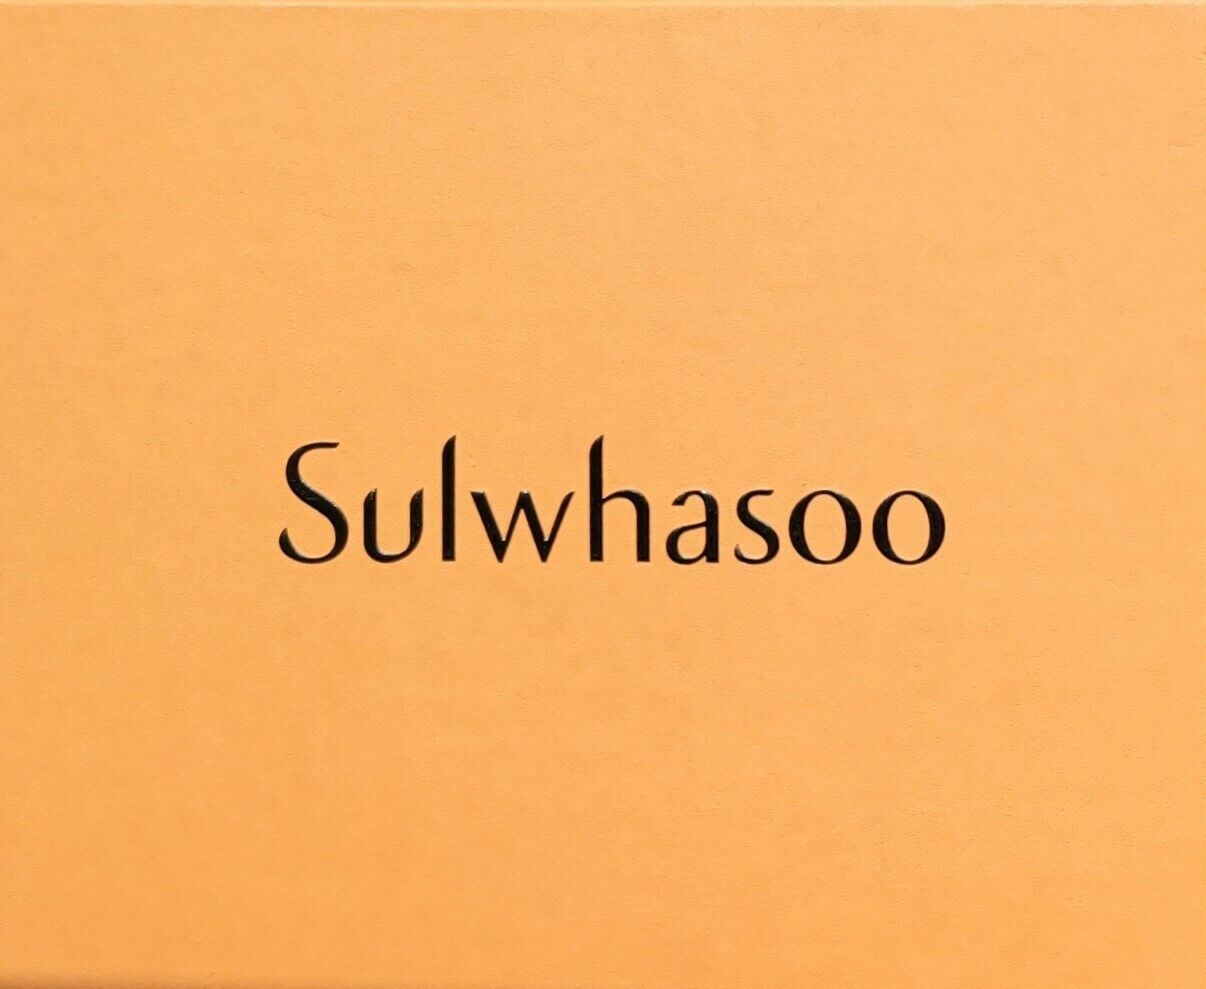 Sulwhasoo Ginseng Renewing Skincare Set+4 Travel Kits/Toner+Emulsion+Serum+Cream